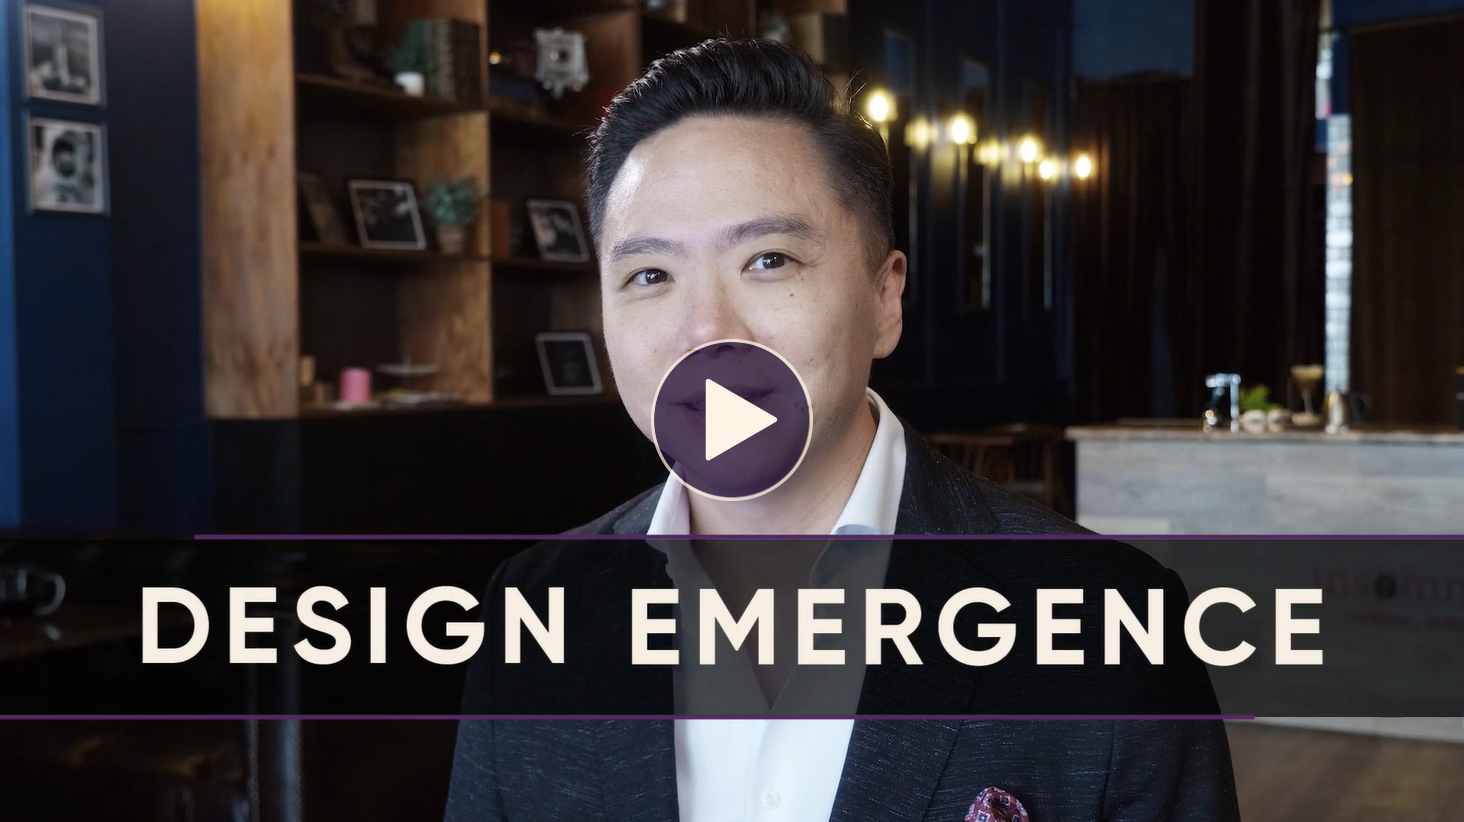 Design Emergence Video Screenshot